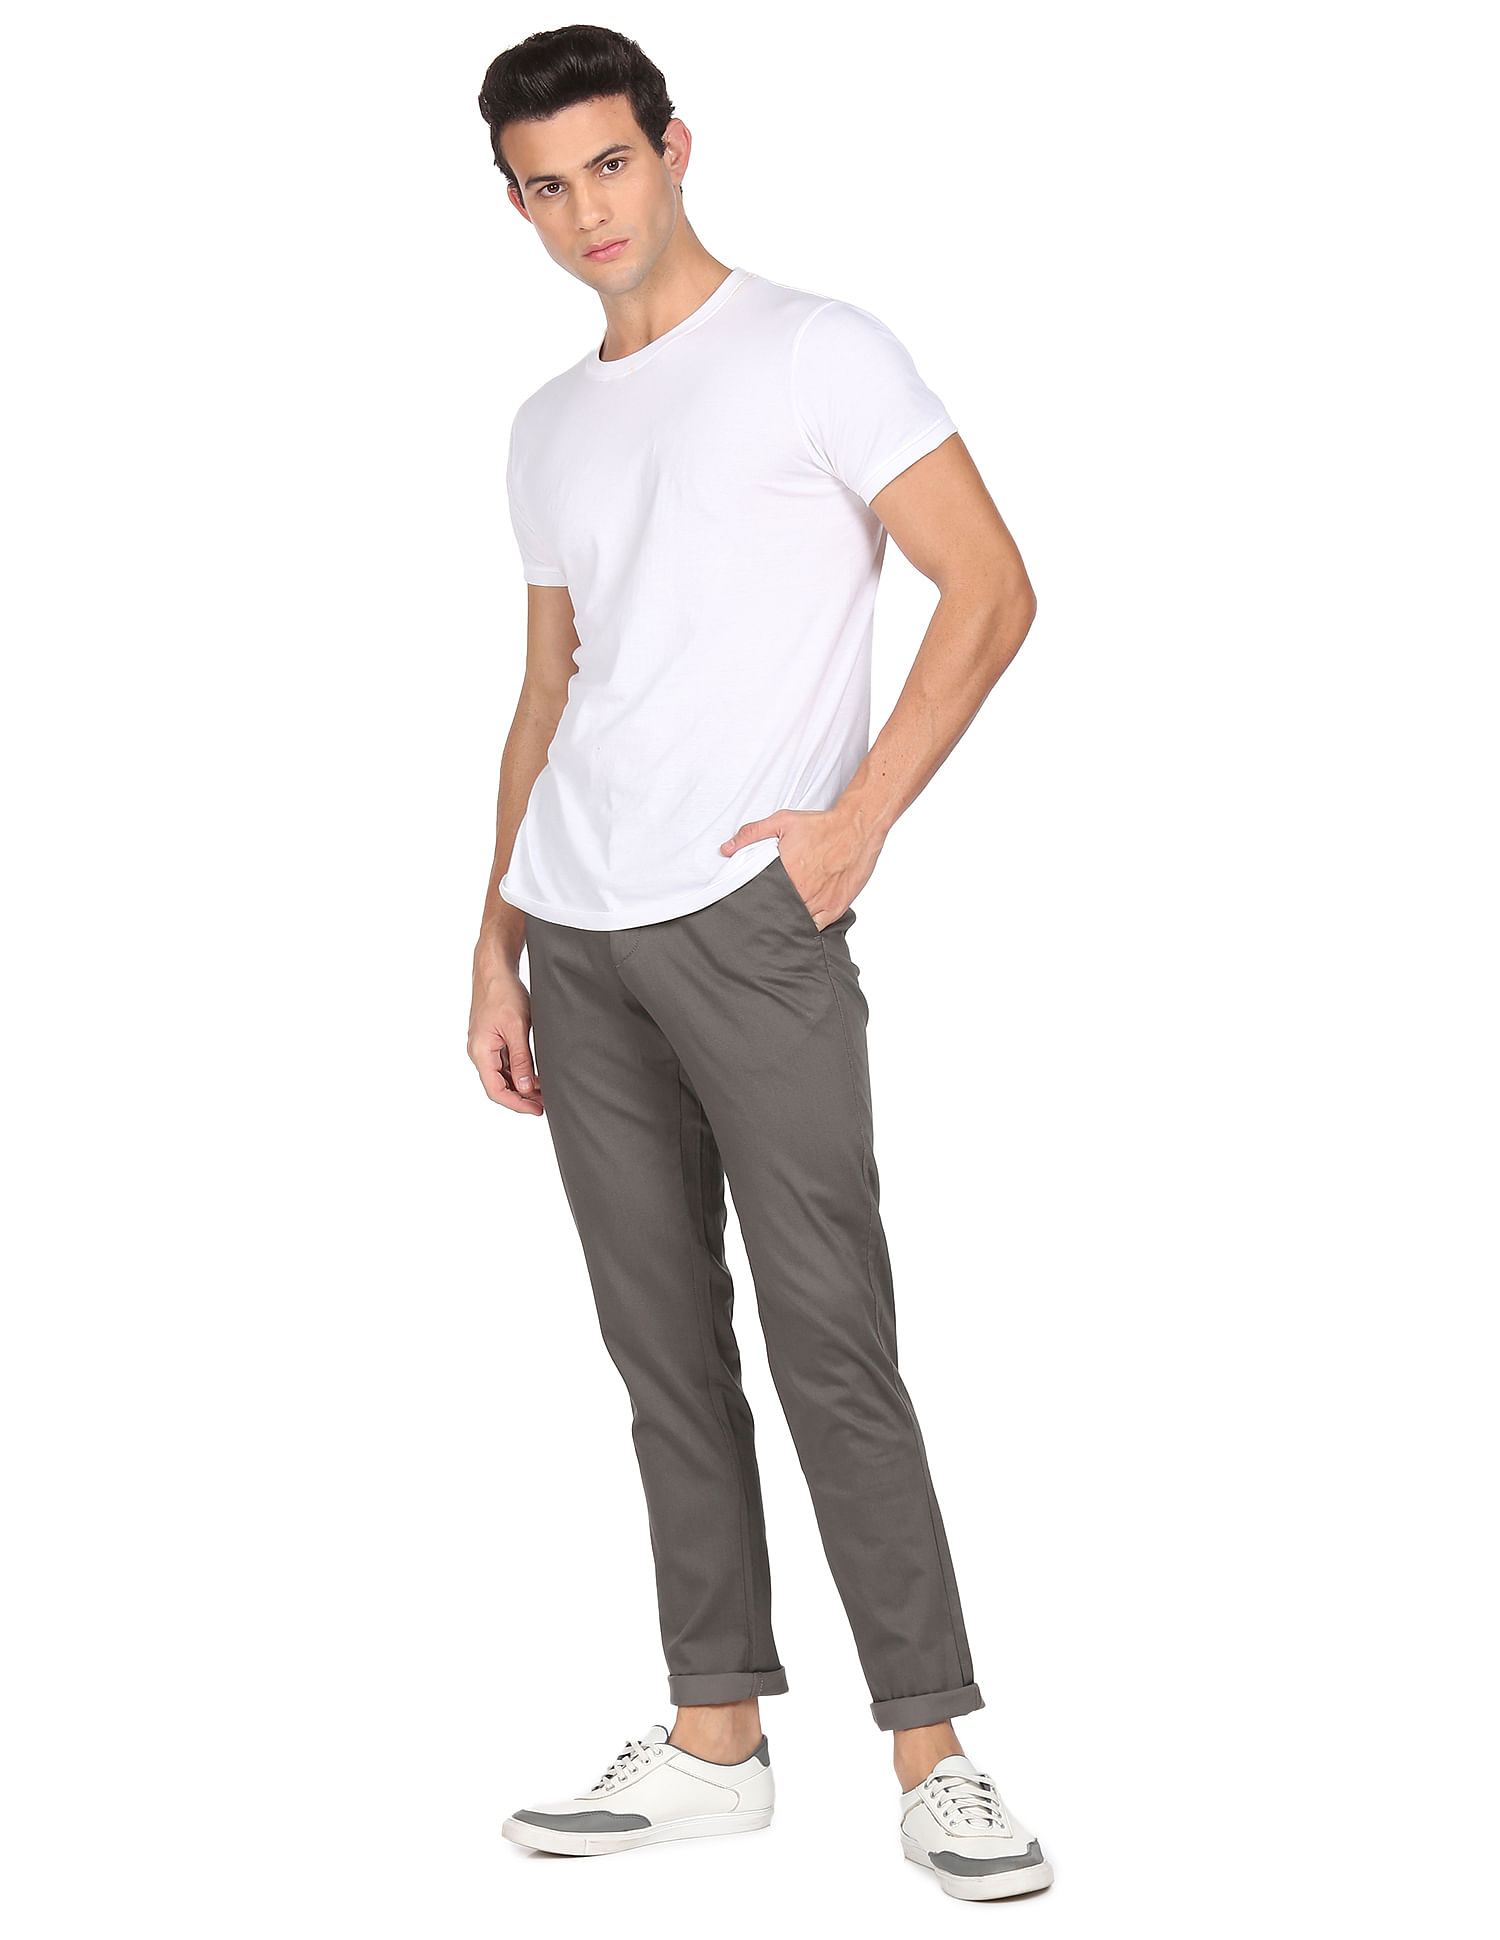 Buy Men Grey Textured Super Slim Fit Formal Trousers Online - 741458 |  Peter England